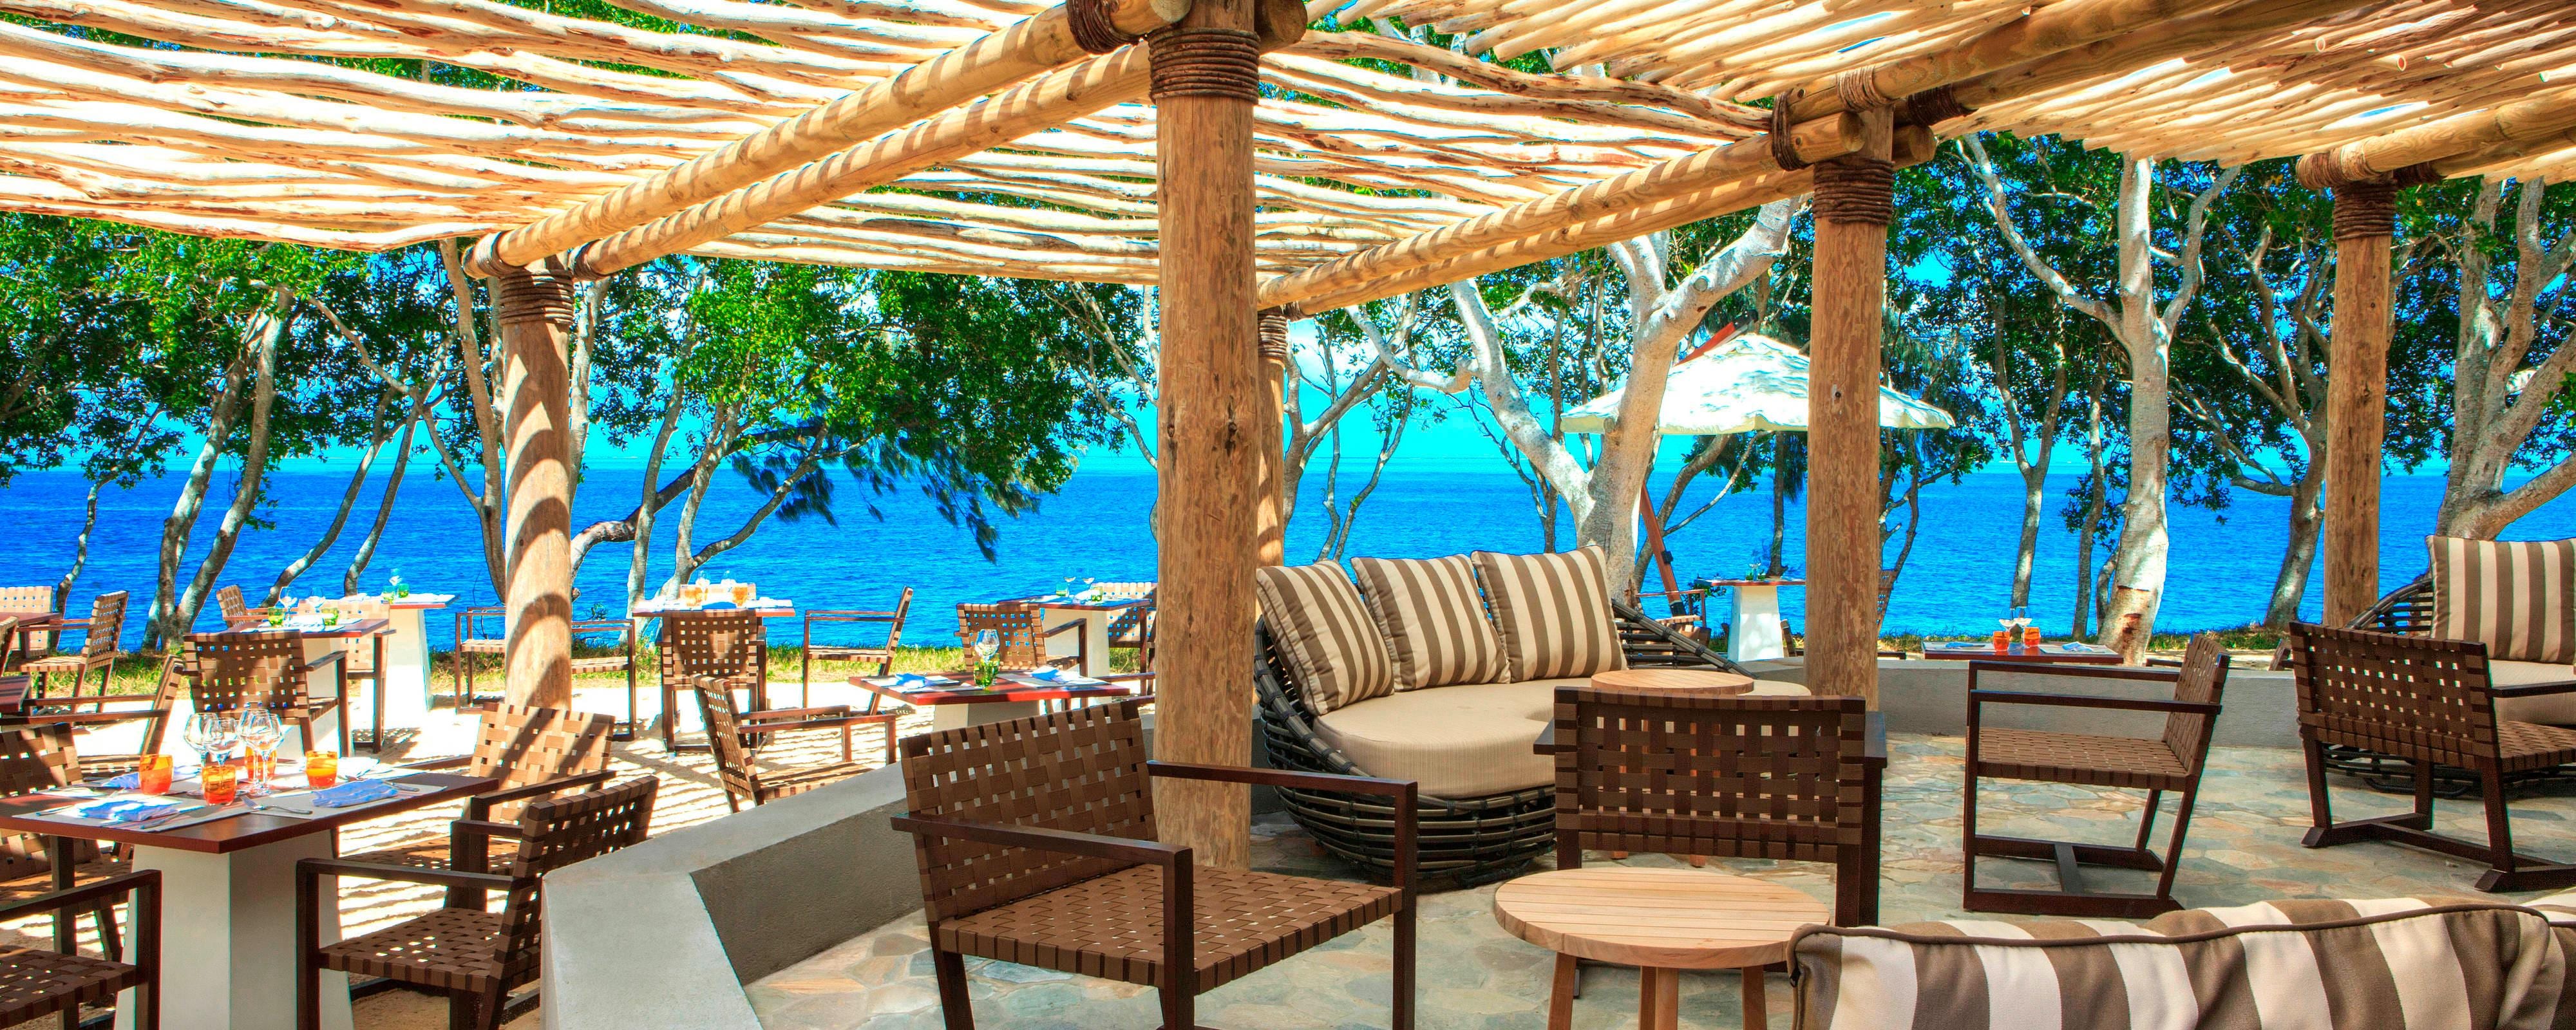 Image for Sheraton New Caledonia Deva Spa & Golf Resort, a Marriott hotel.